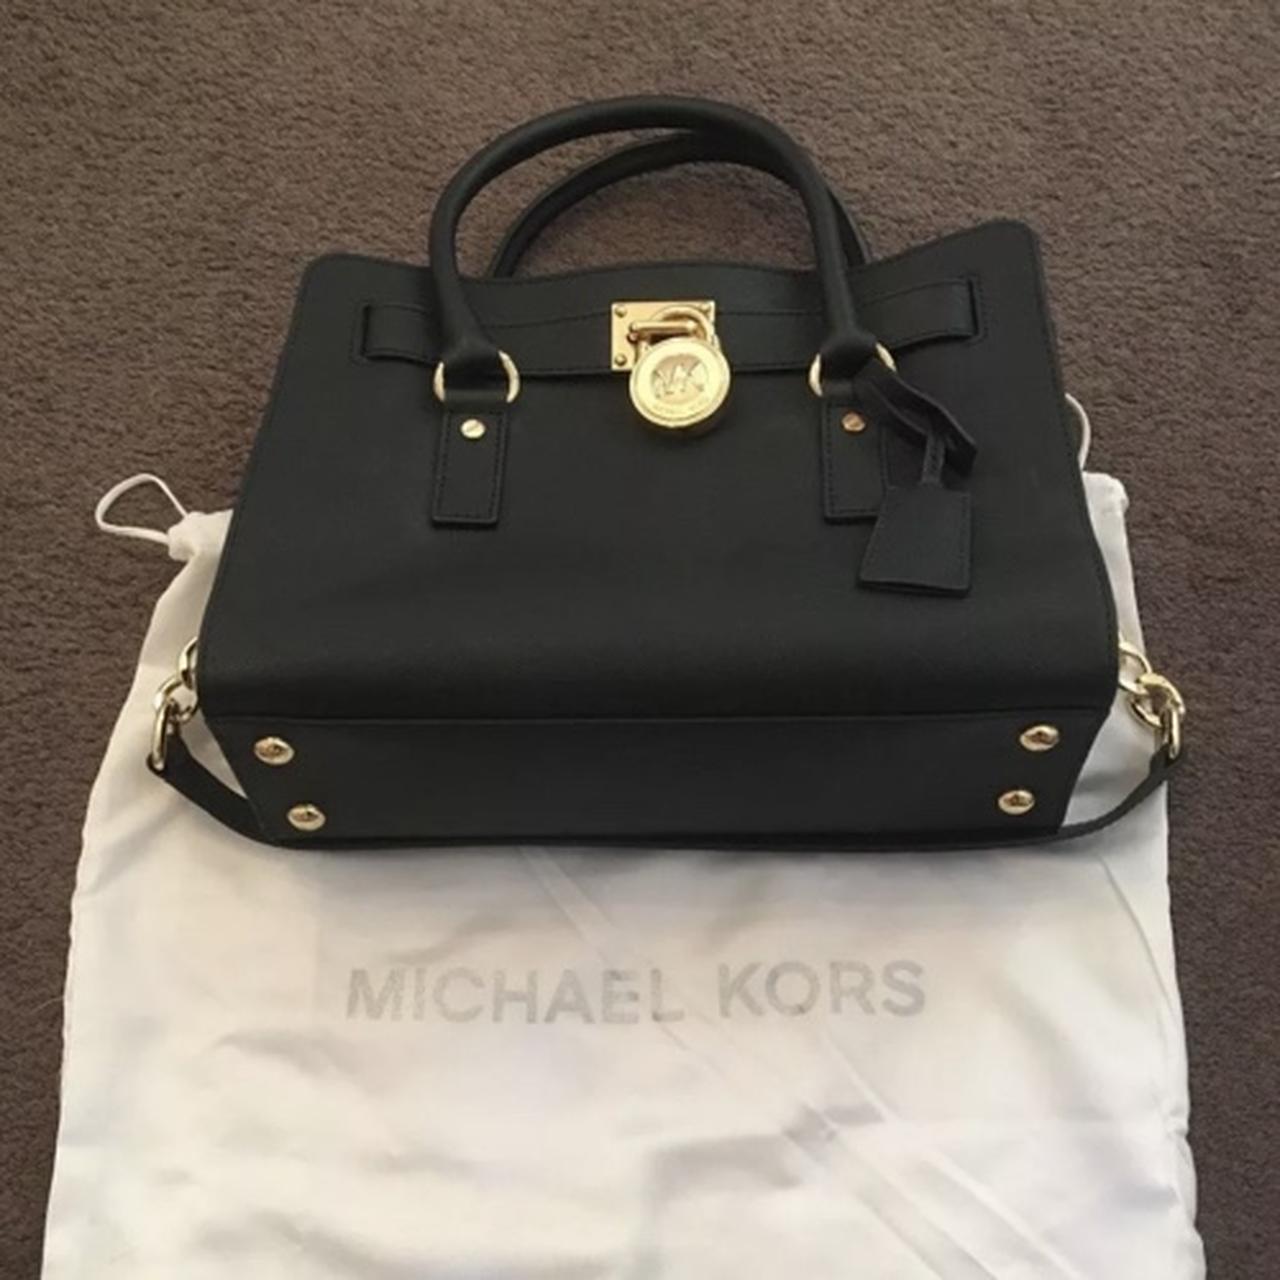 Very loved Michael Kors Hamilton bag. Was my - Depop